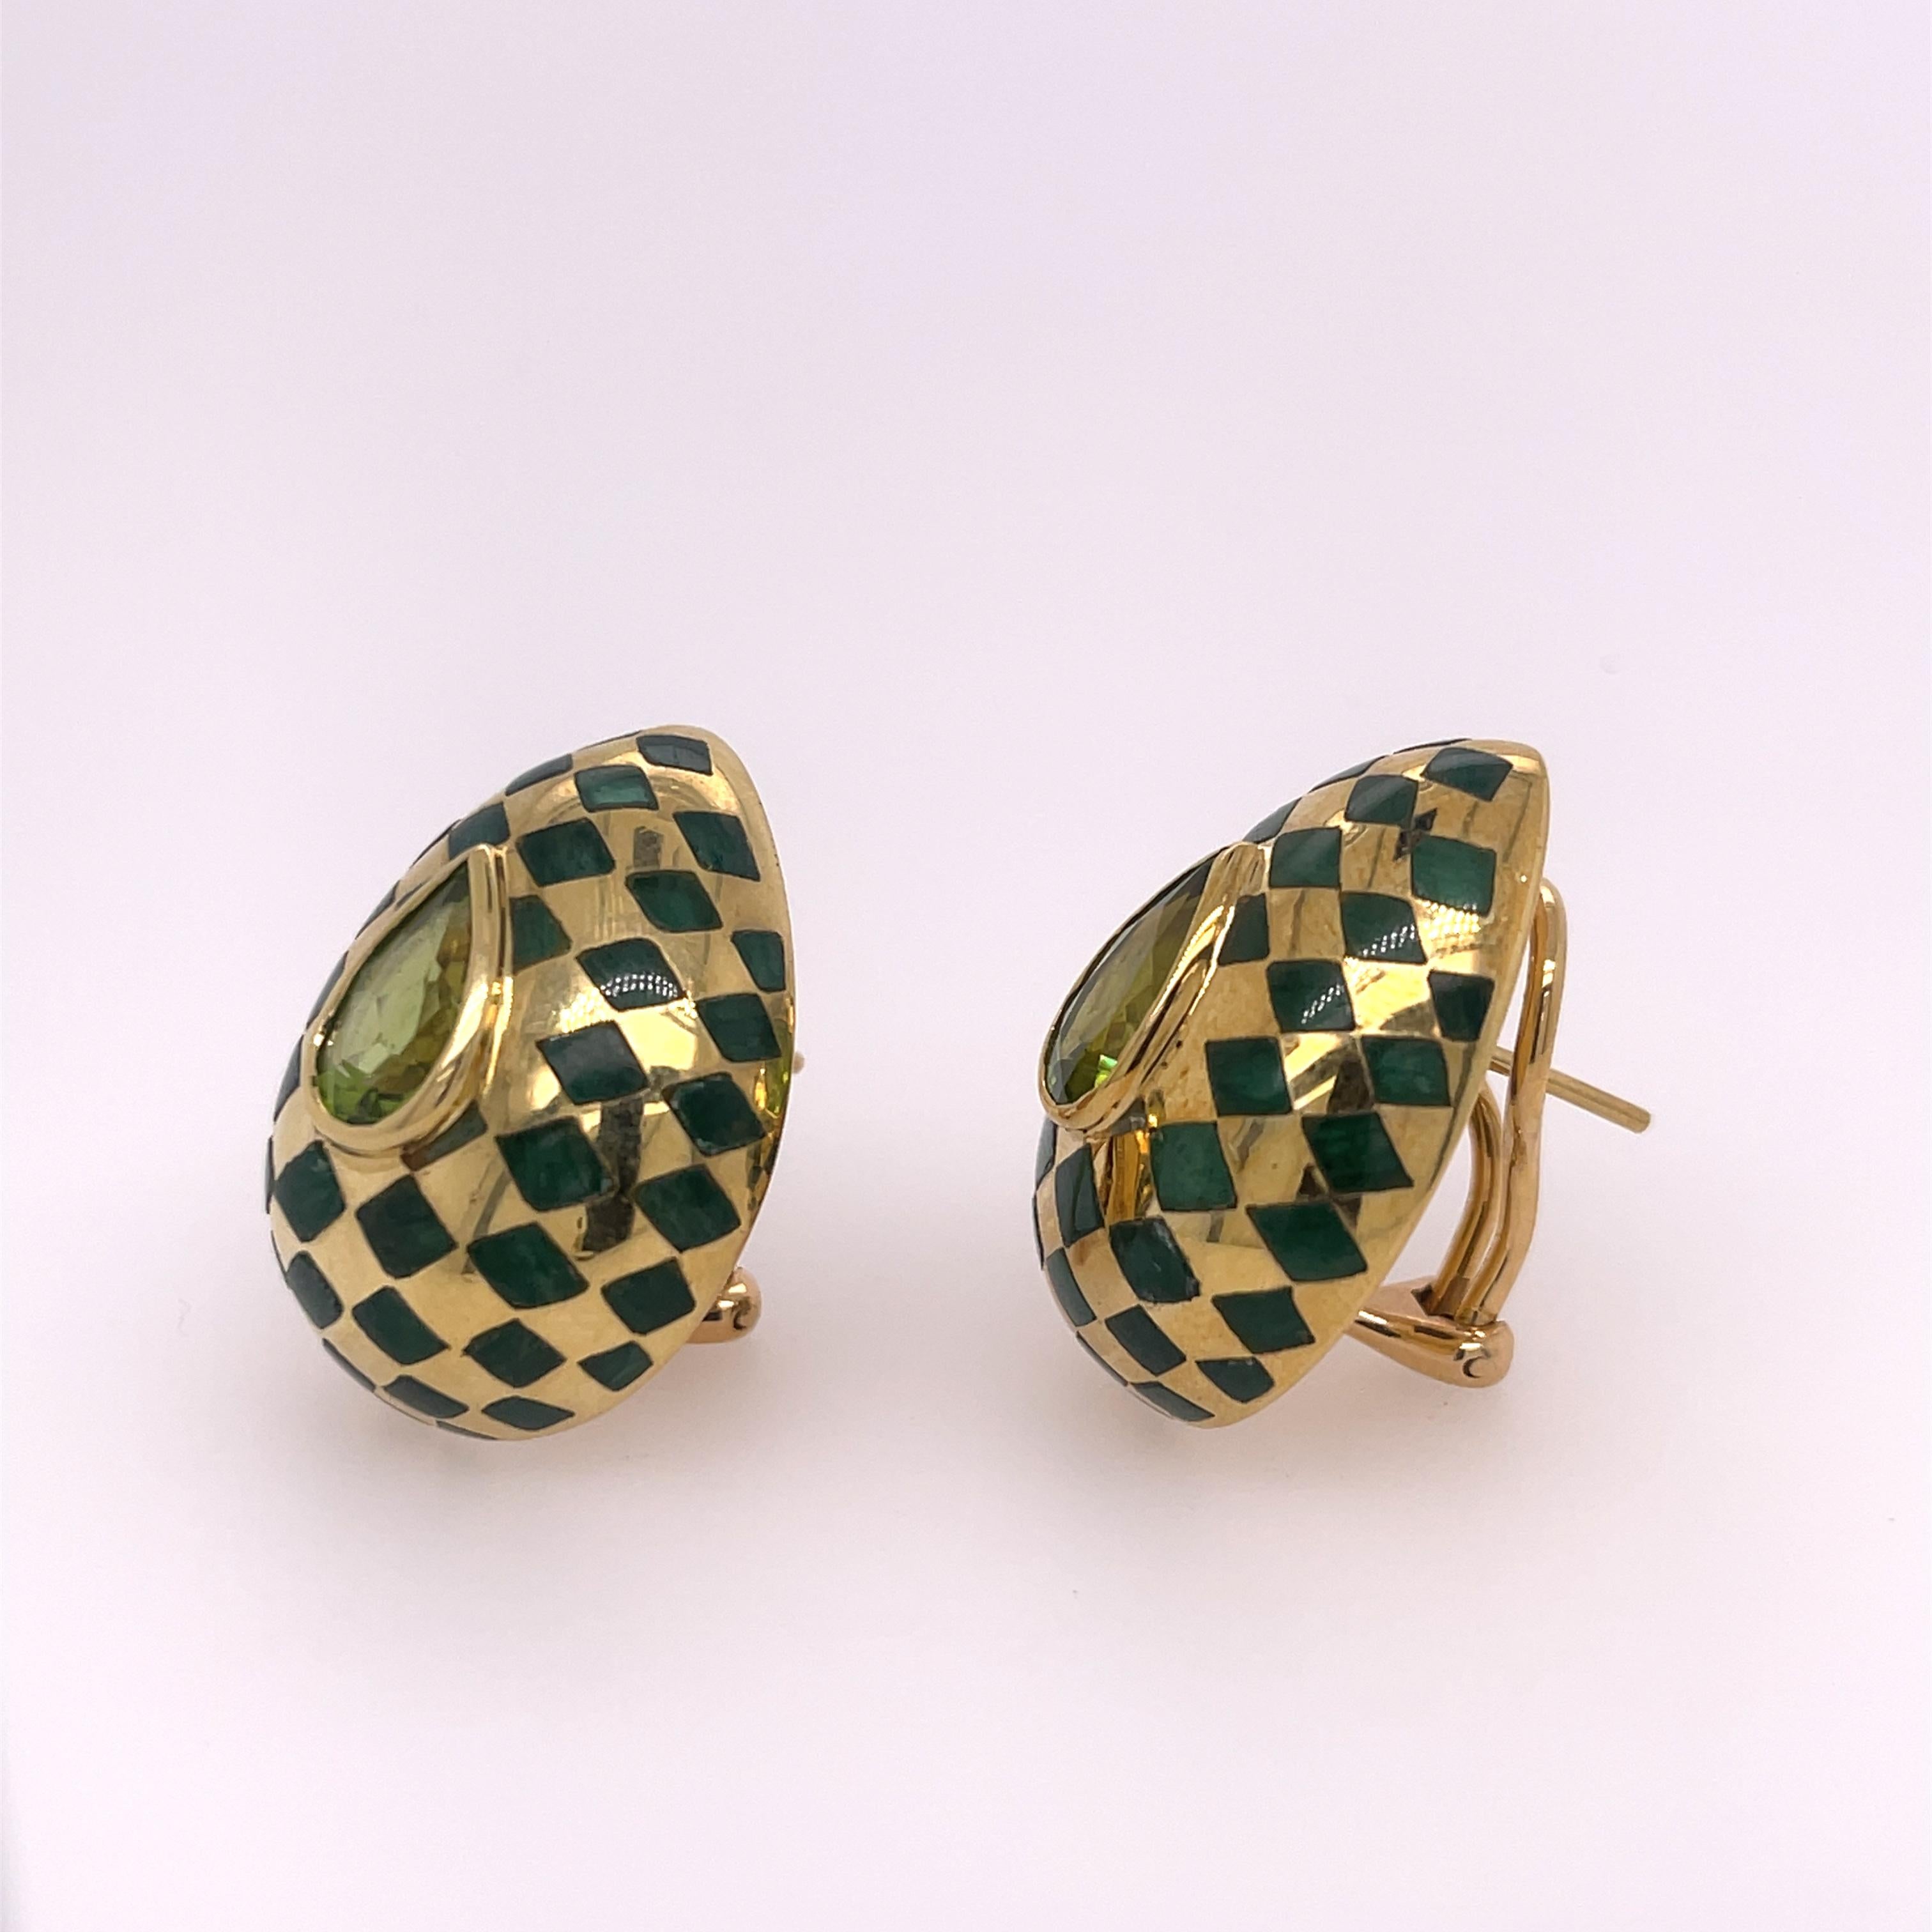 Angela Cummings earrings featuring checkered green jade and pear shaped peridot. Stamped ANGELA CUMMINGS 750.